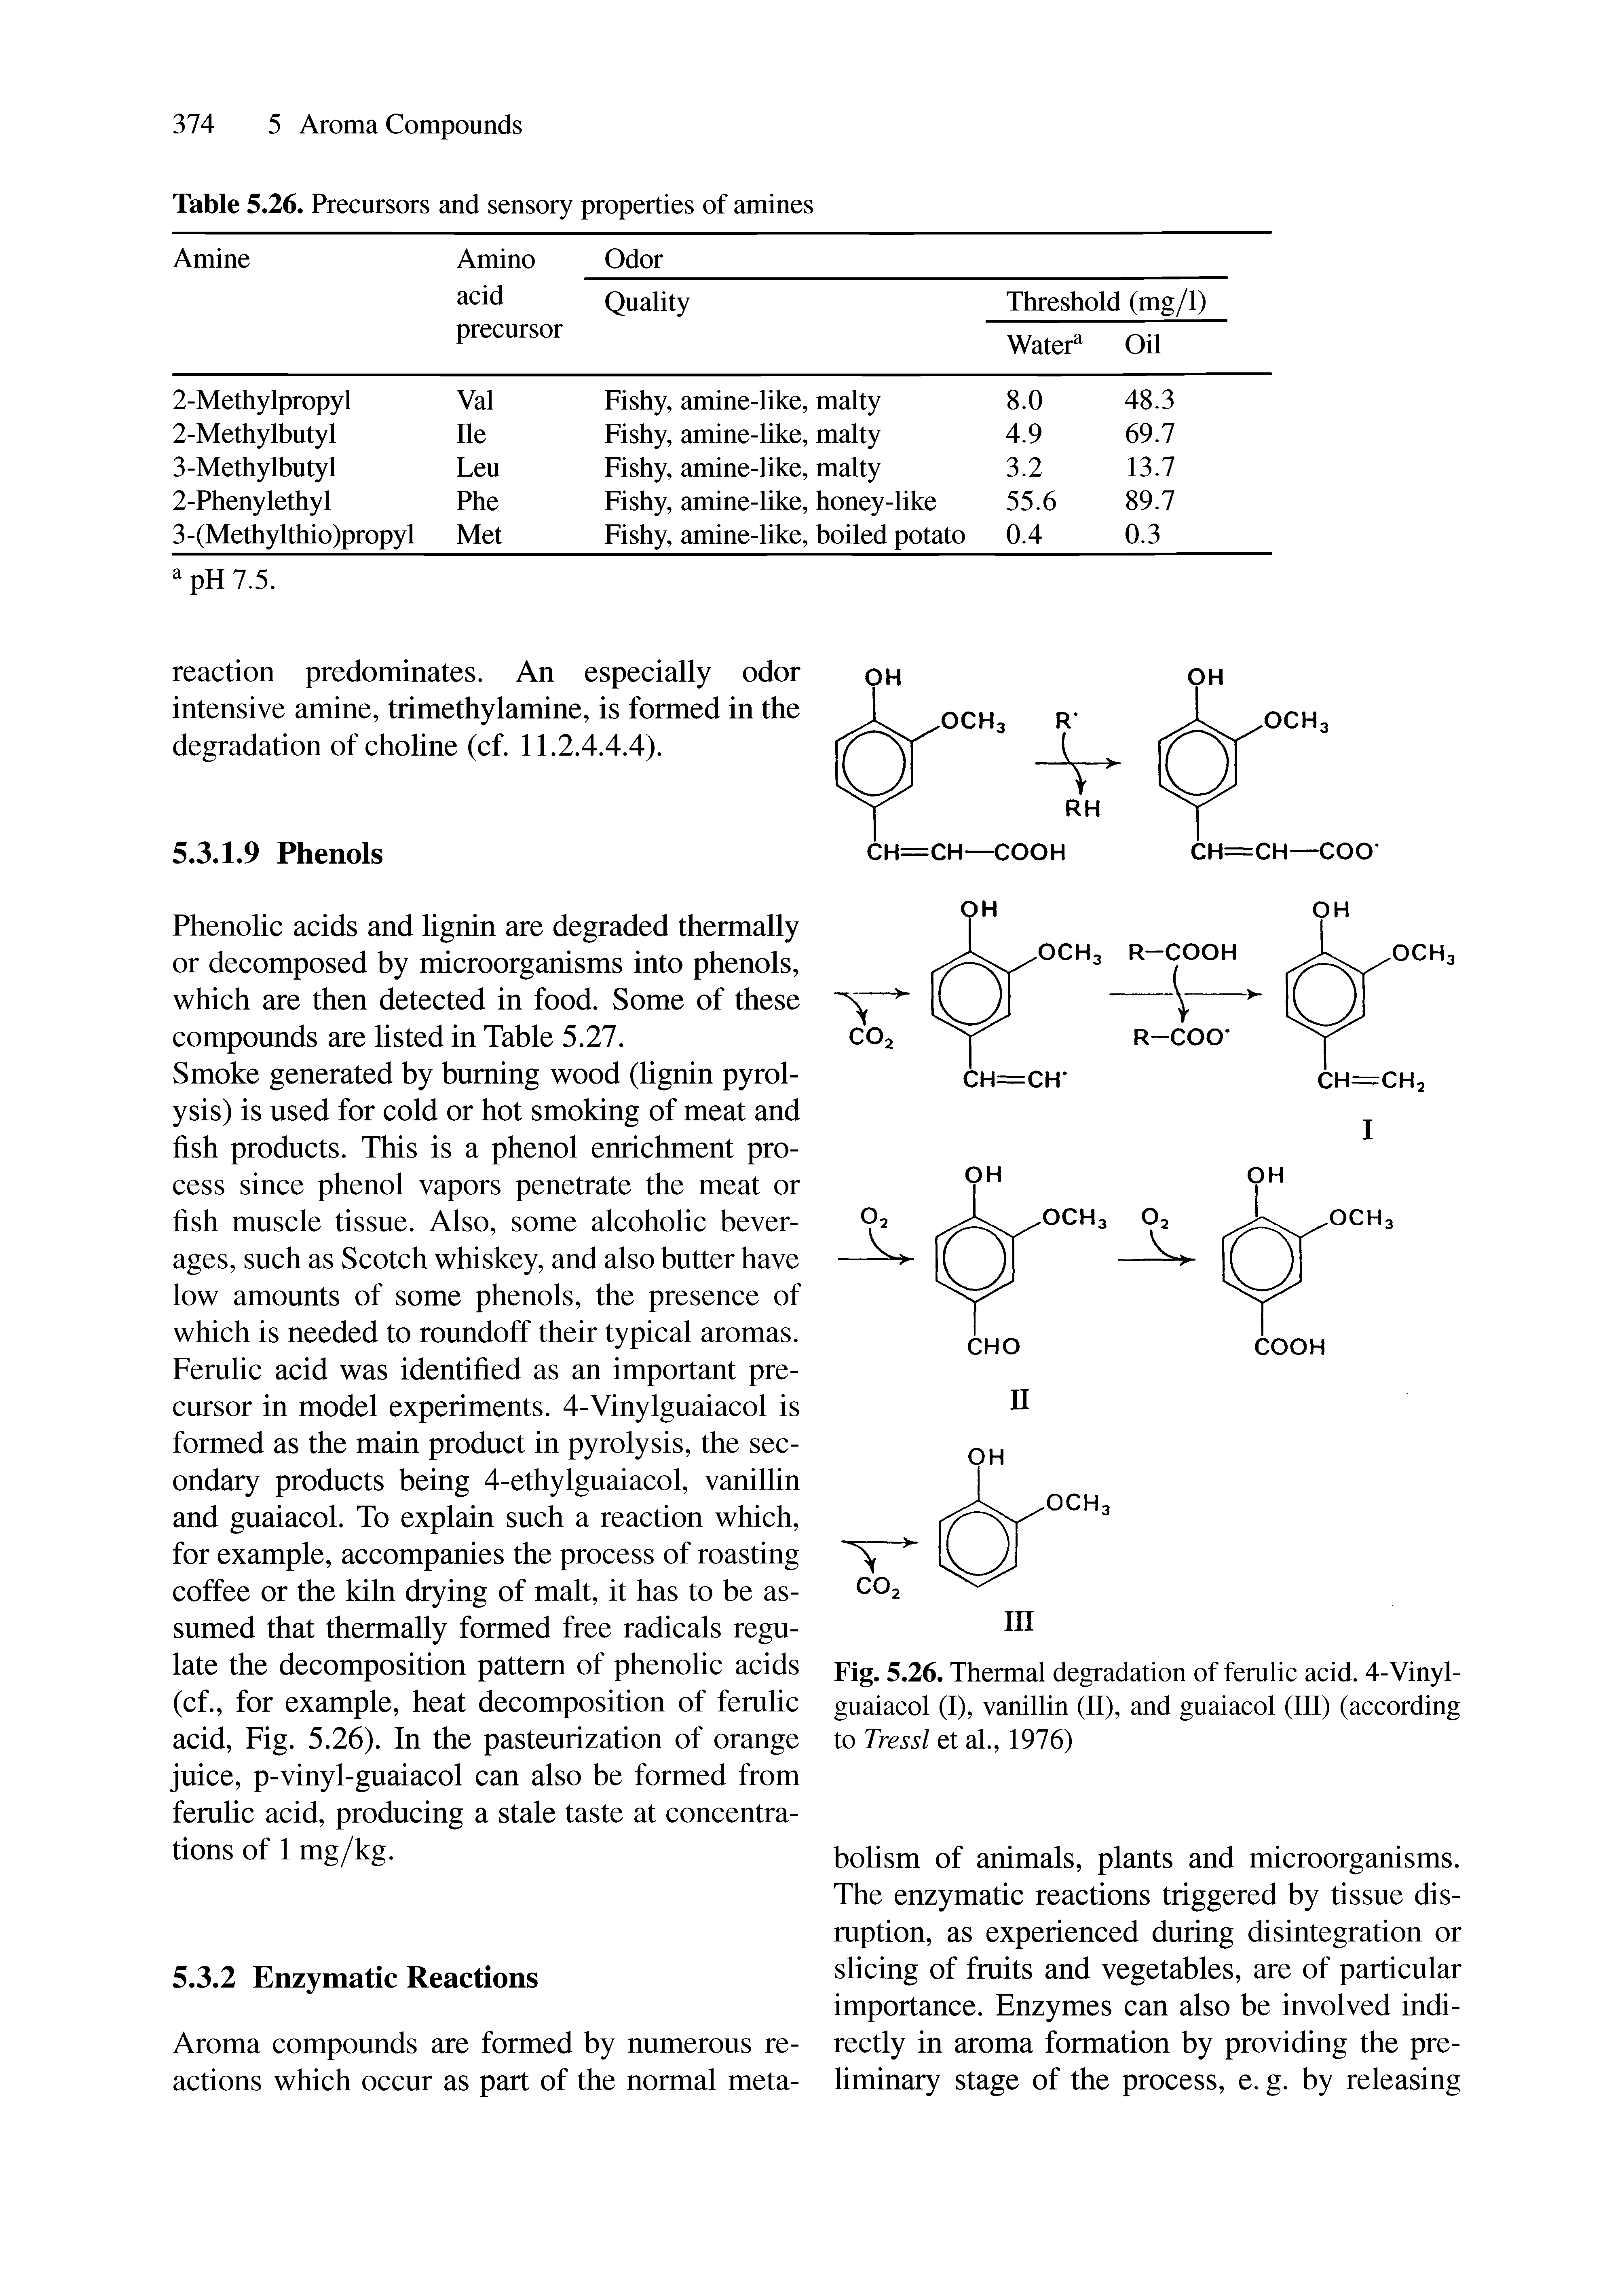 Fig. 5.26. Thermal degradation of ferulic acid. 4-Vinyl-guaiacol (I), vanillin (II), and guaiacol (III) (according to Tressl et al., 1976)...